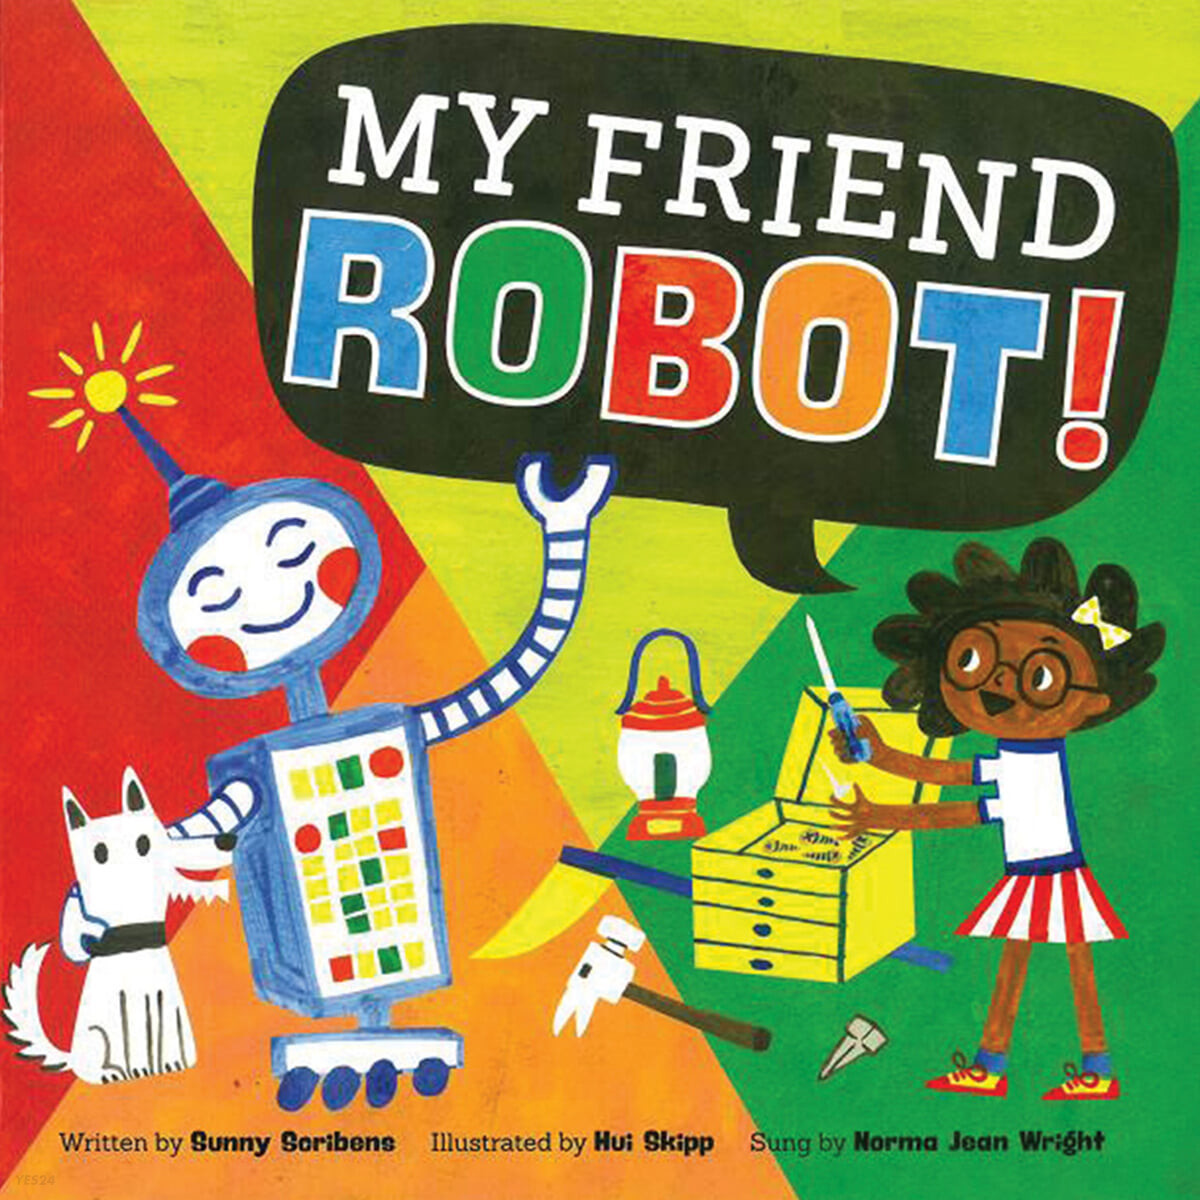 My friend robot!